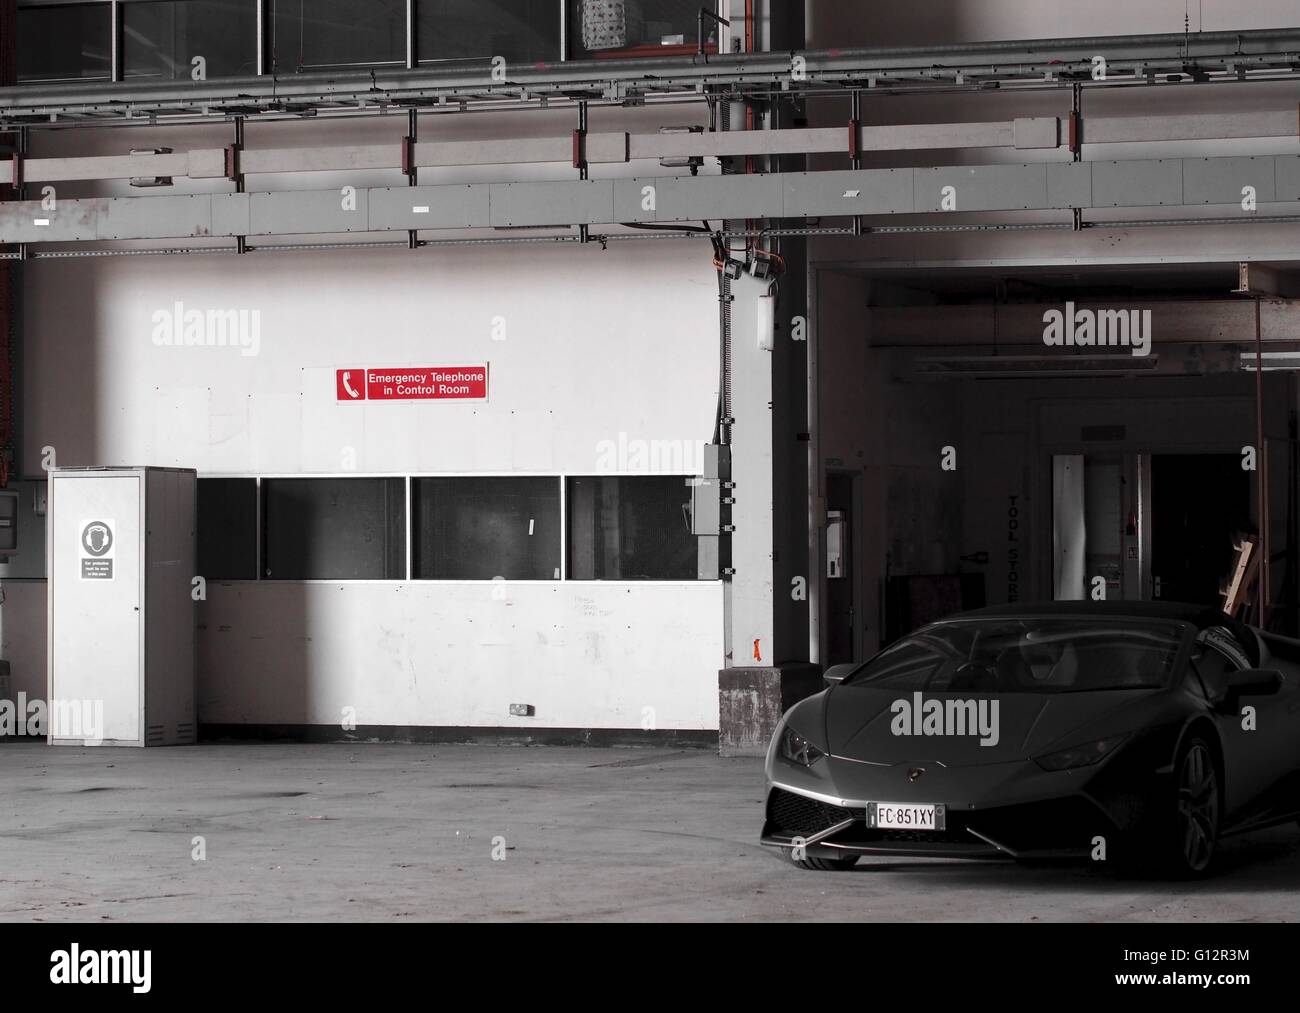 Lamborghini Huracan in Lager mit Schild an Wand sagen Notfall Telefon im Kontrollraum Stockfoto